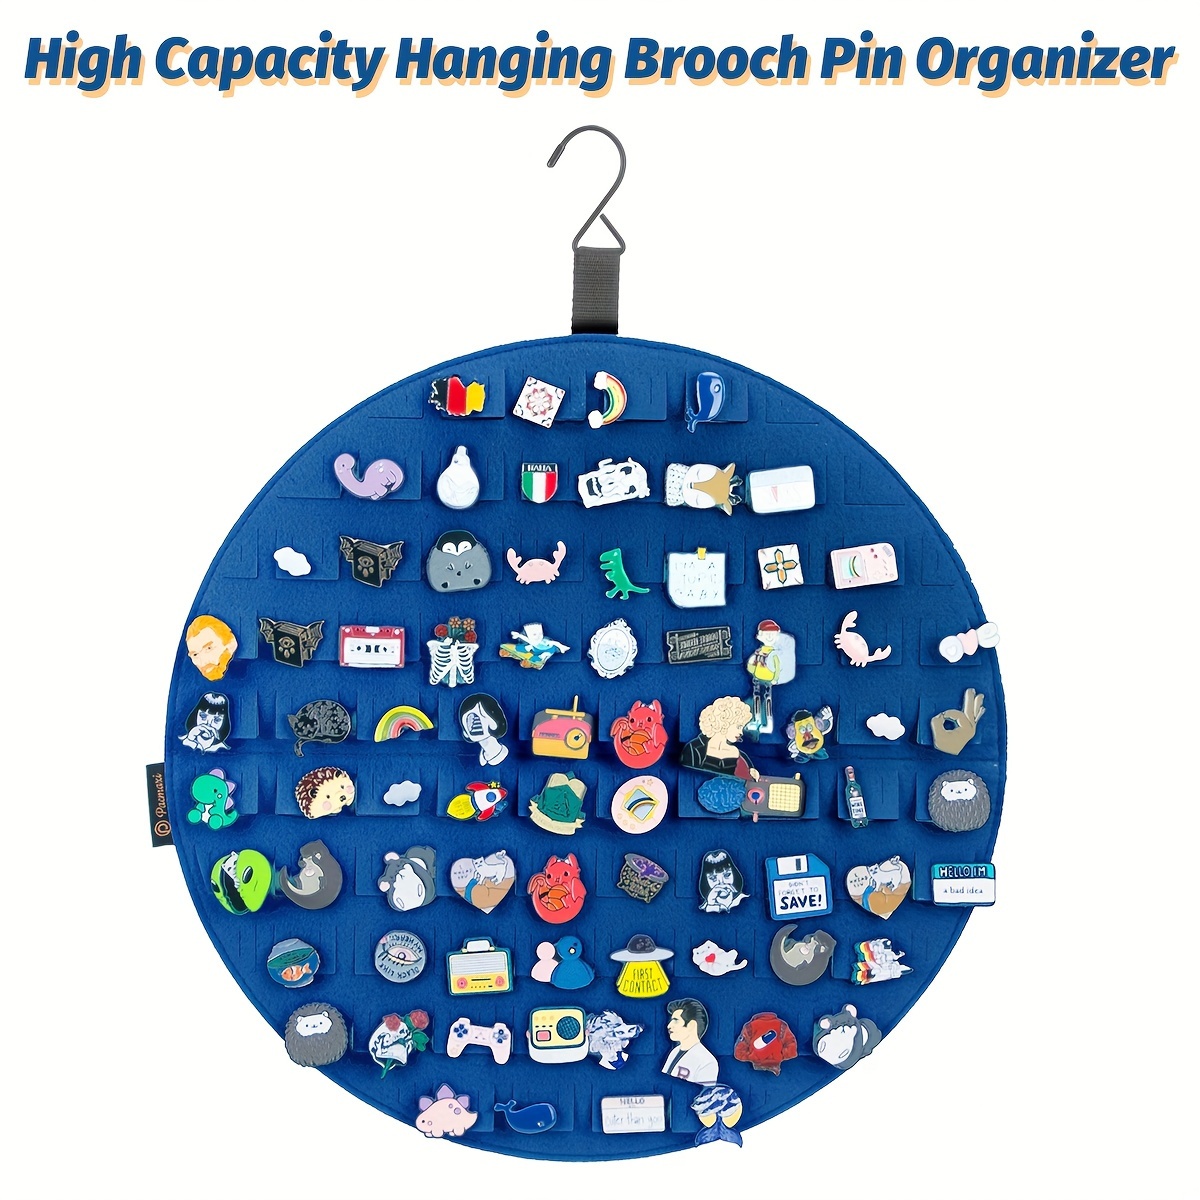 Hanging Brooch Storage Pin Organizer Wall Display Stand Banner